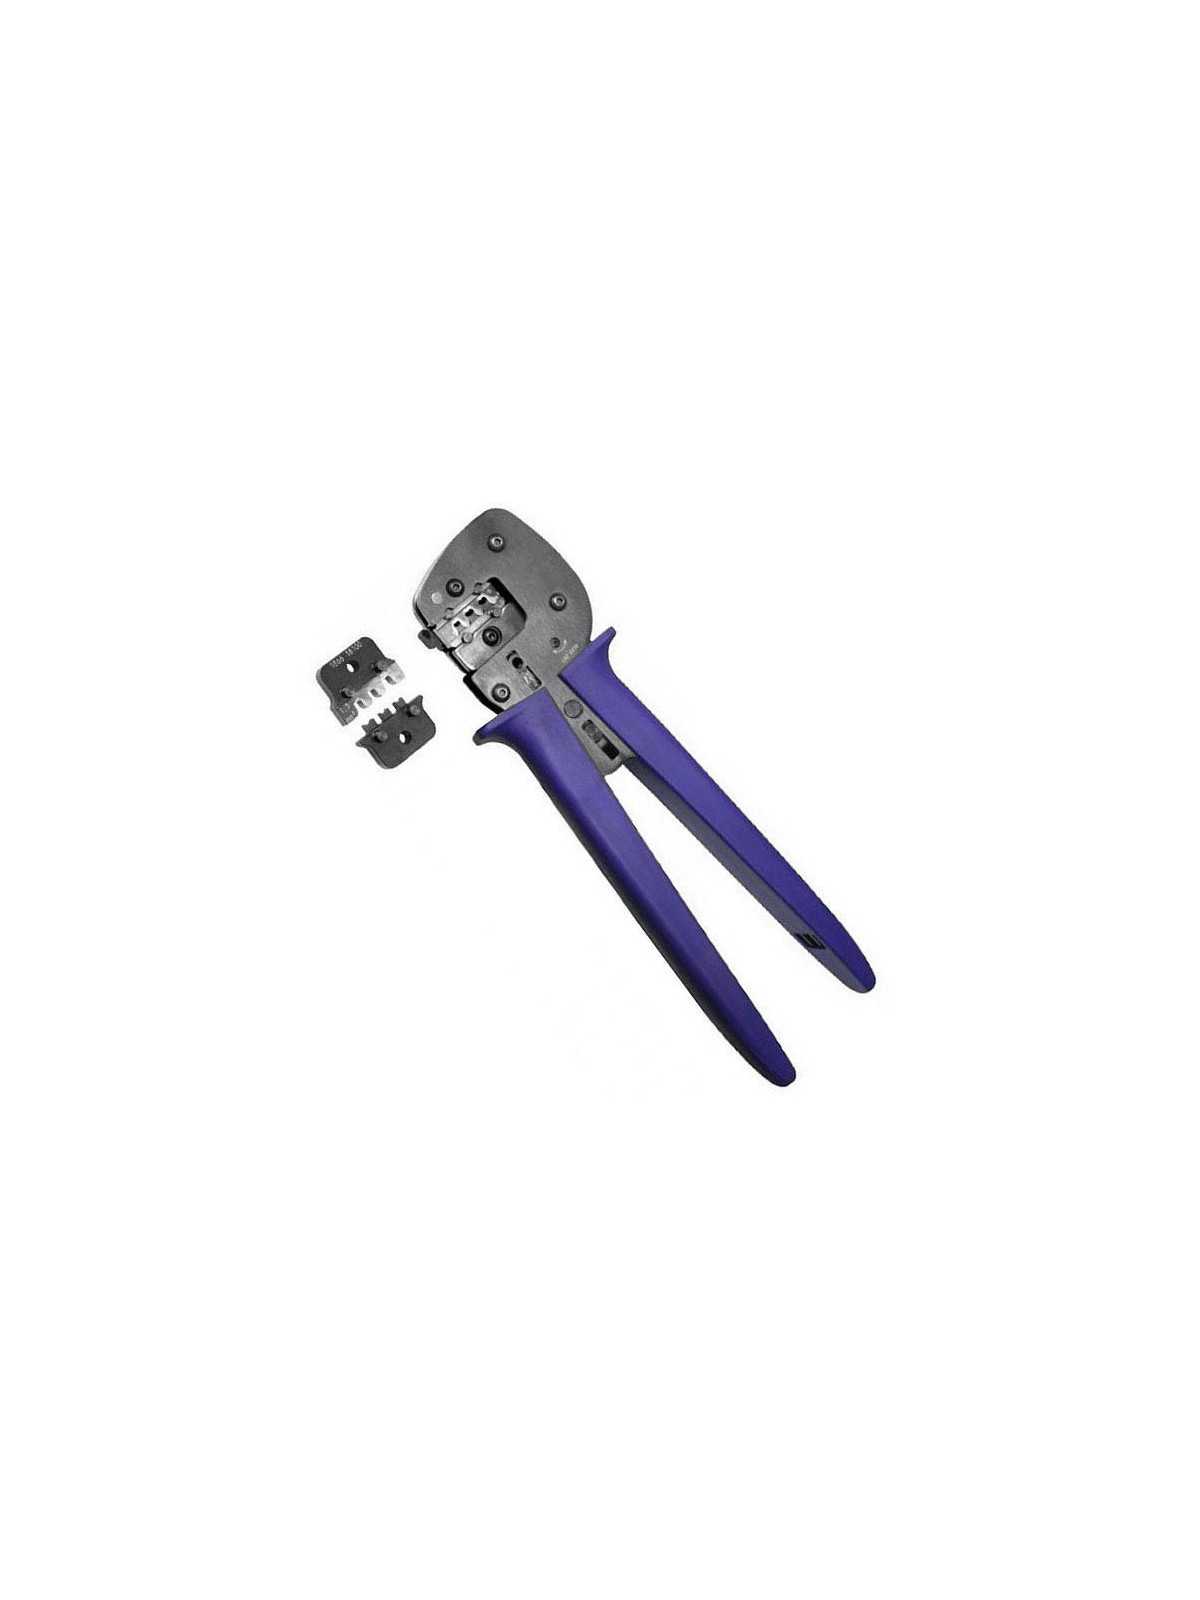 Crimping pliers for MC4 type connectors